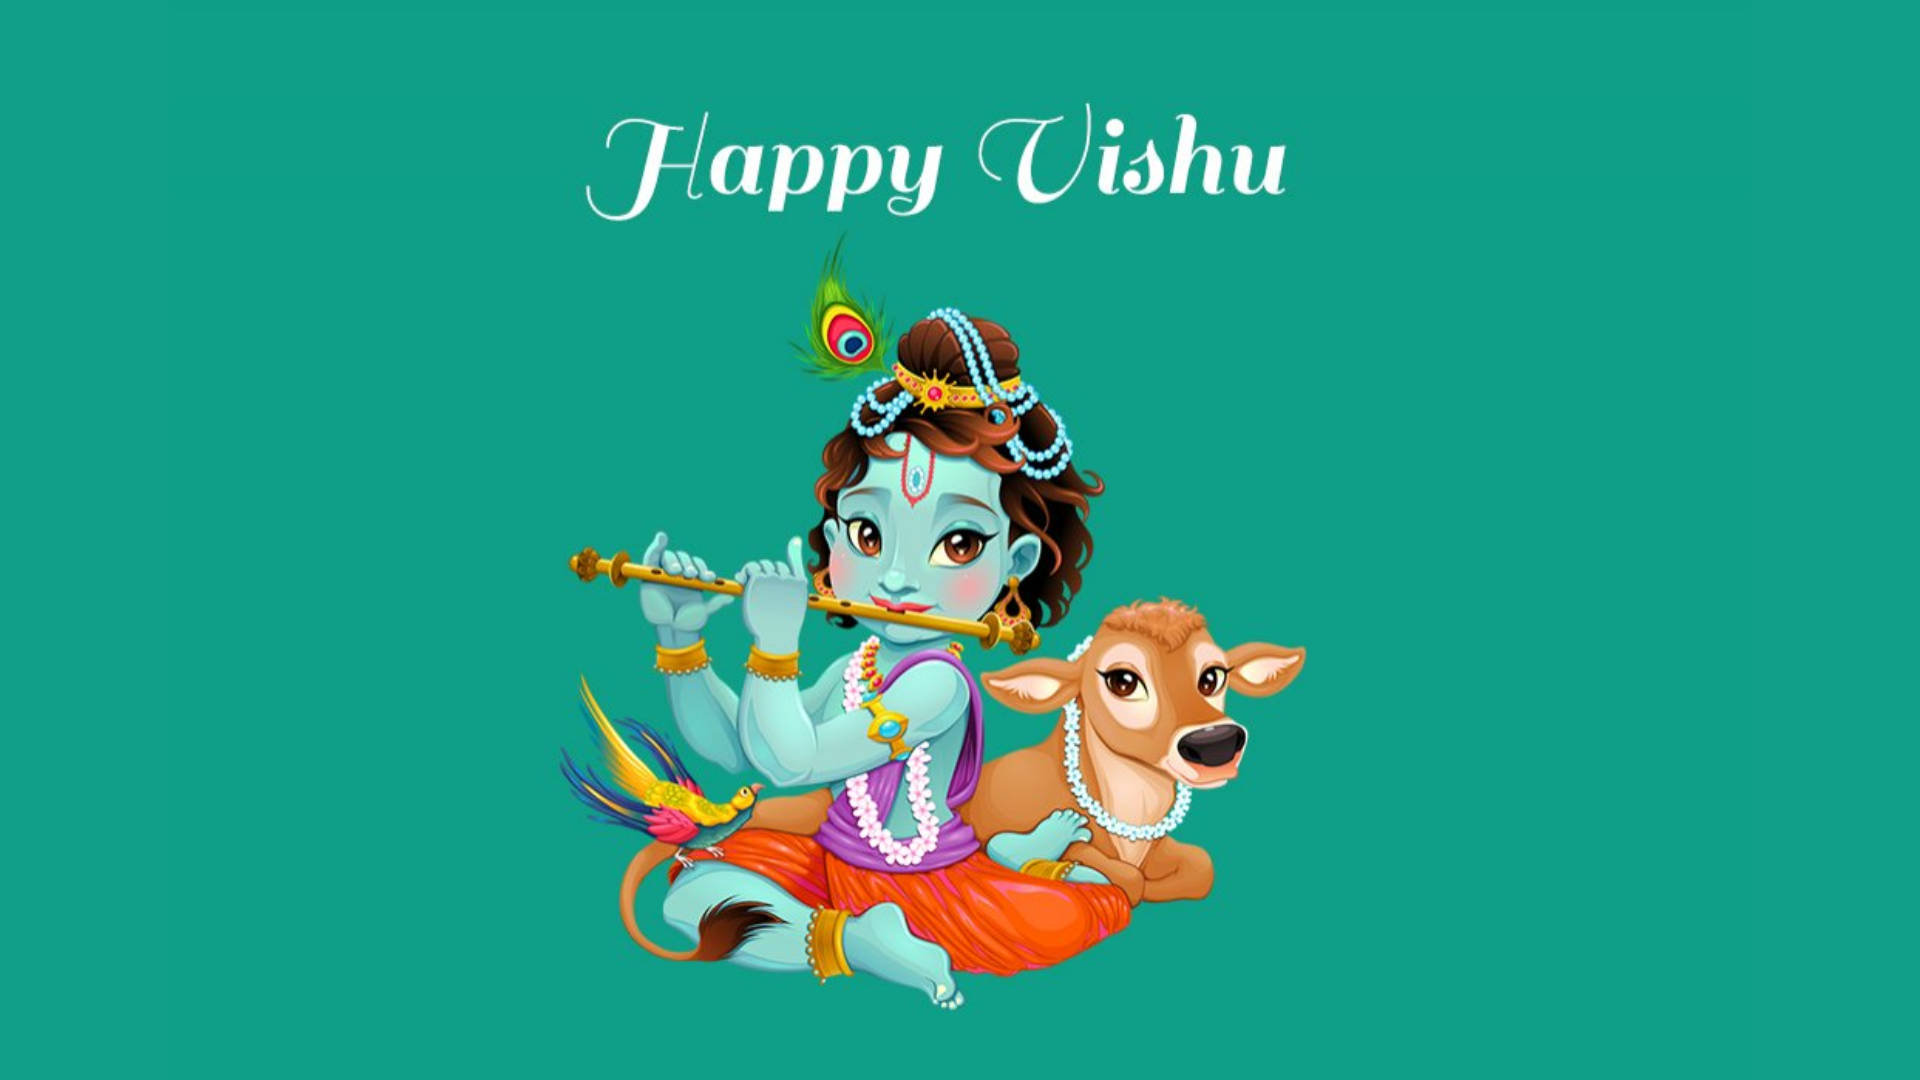 Happy Vishu Greeting Card In Sea Green Color Wallpaper